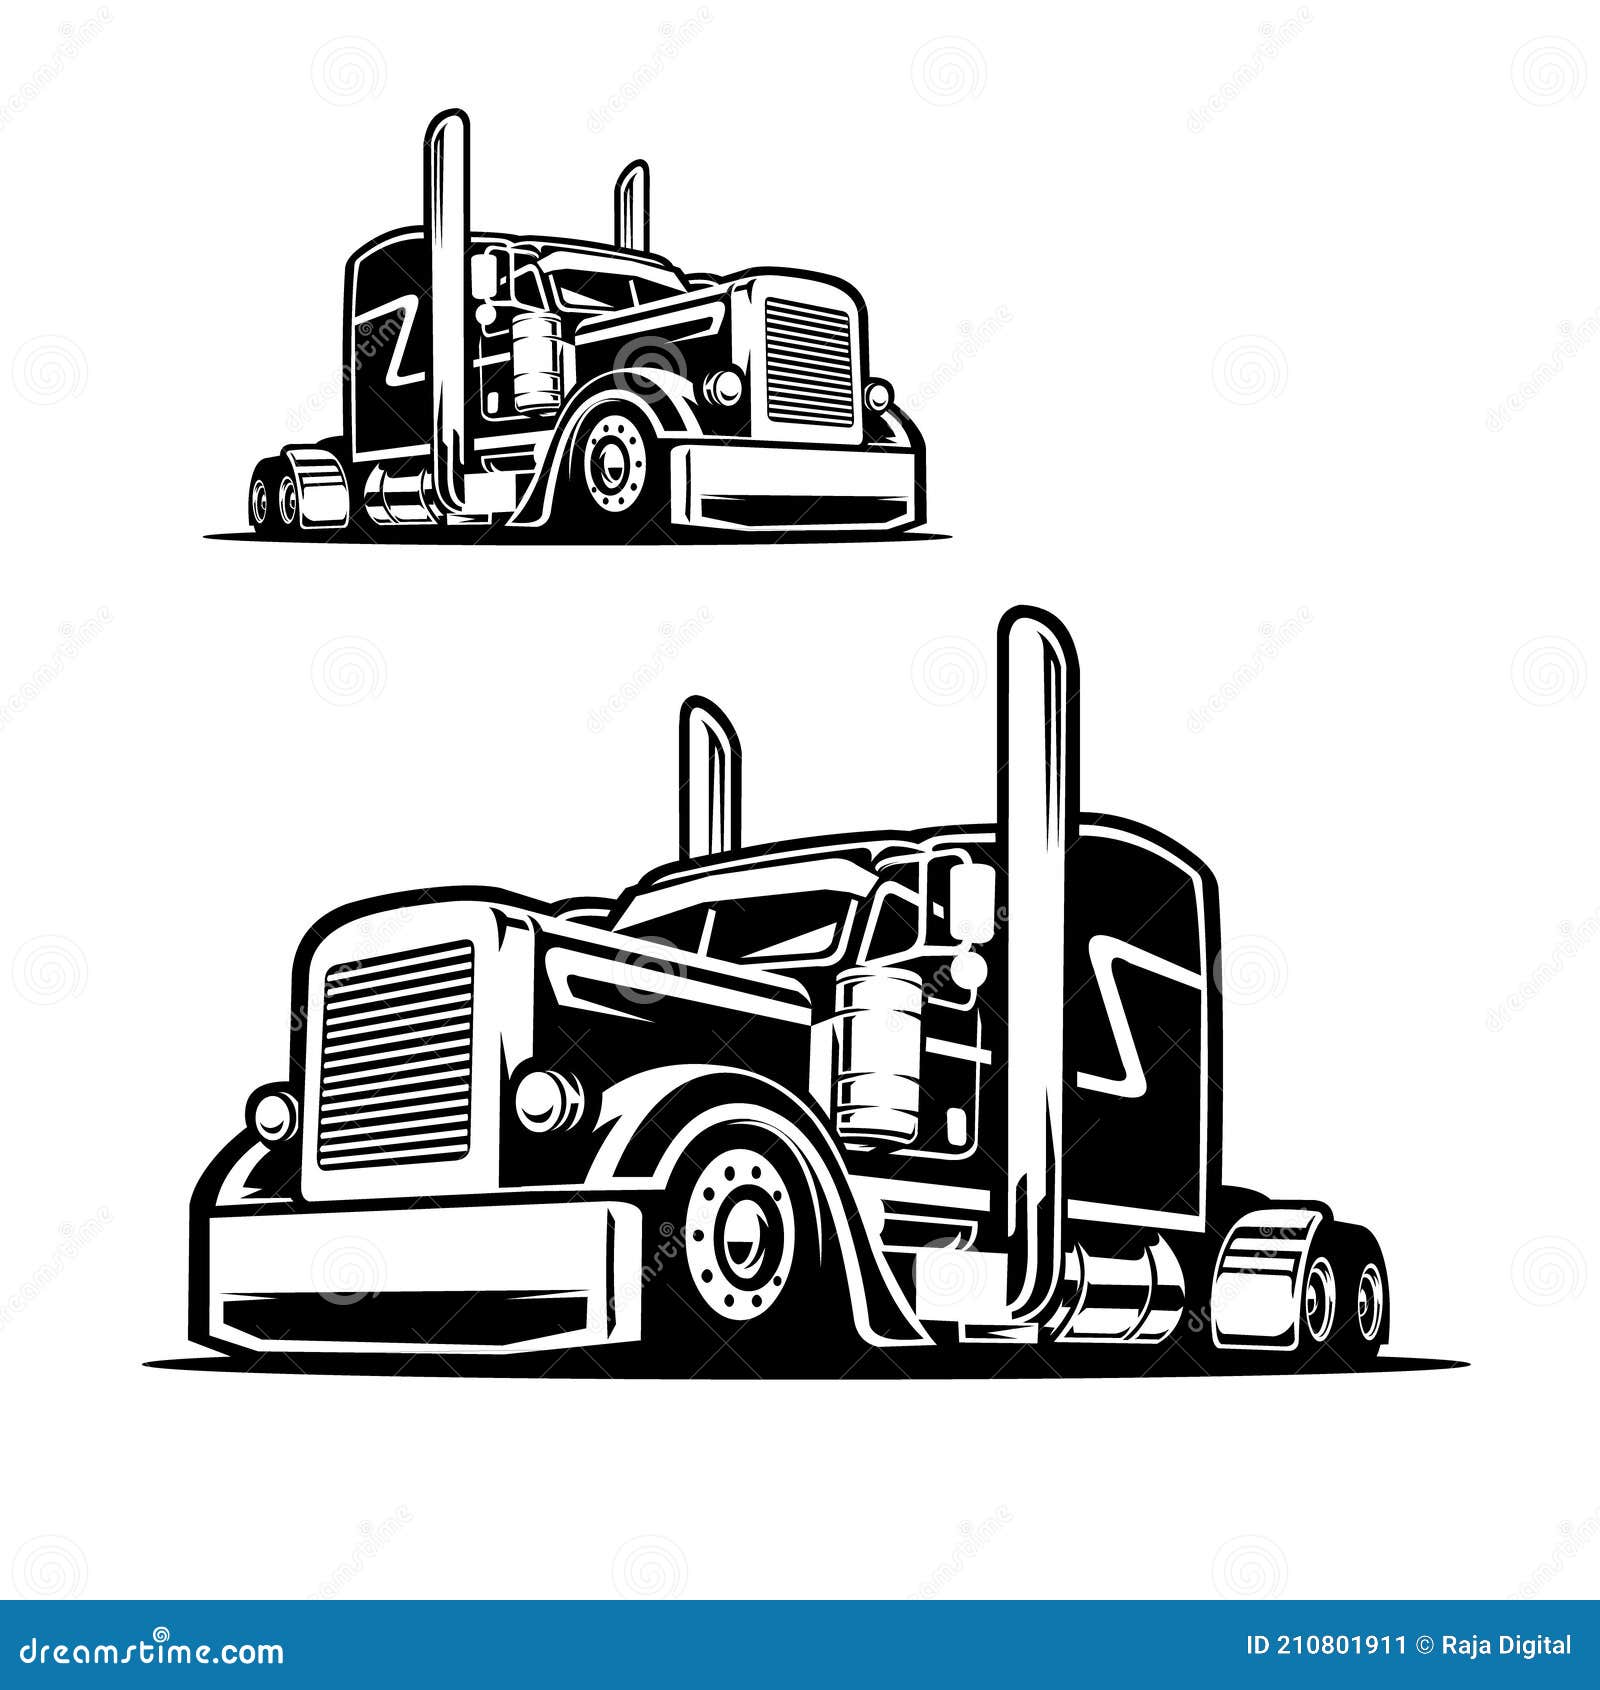 semi truck   image. 18 wheeler  